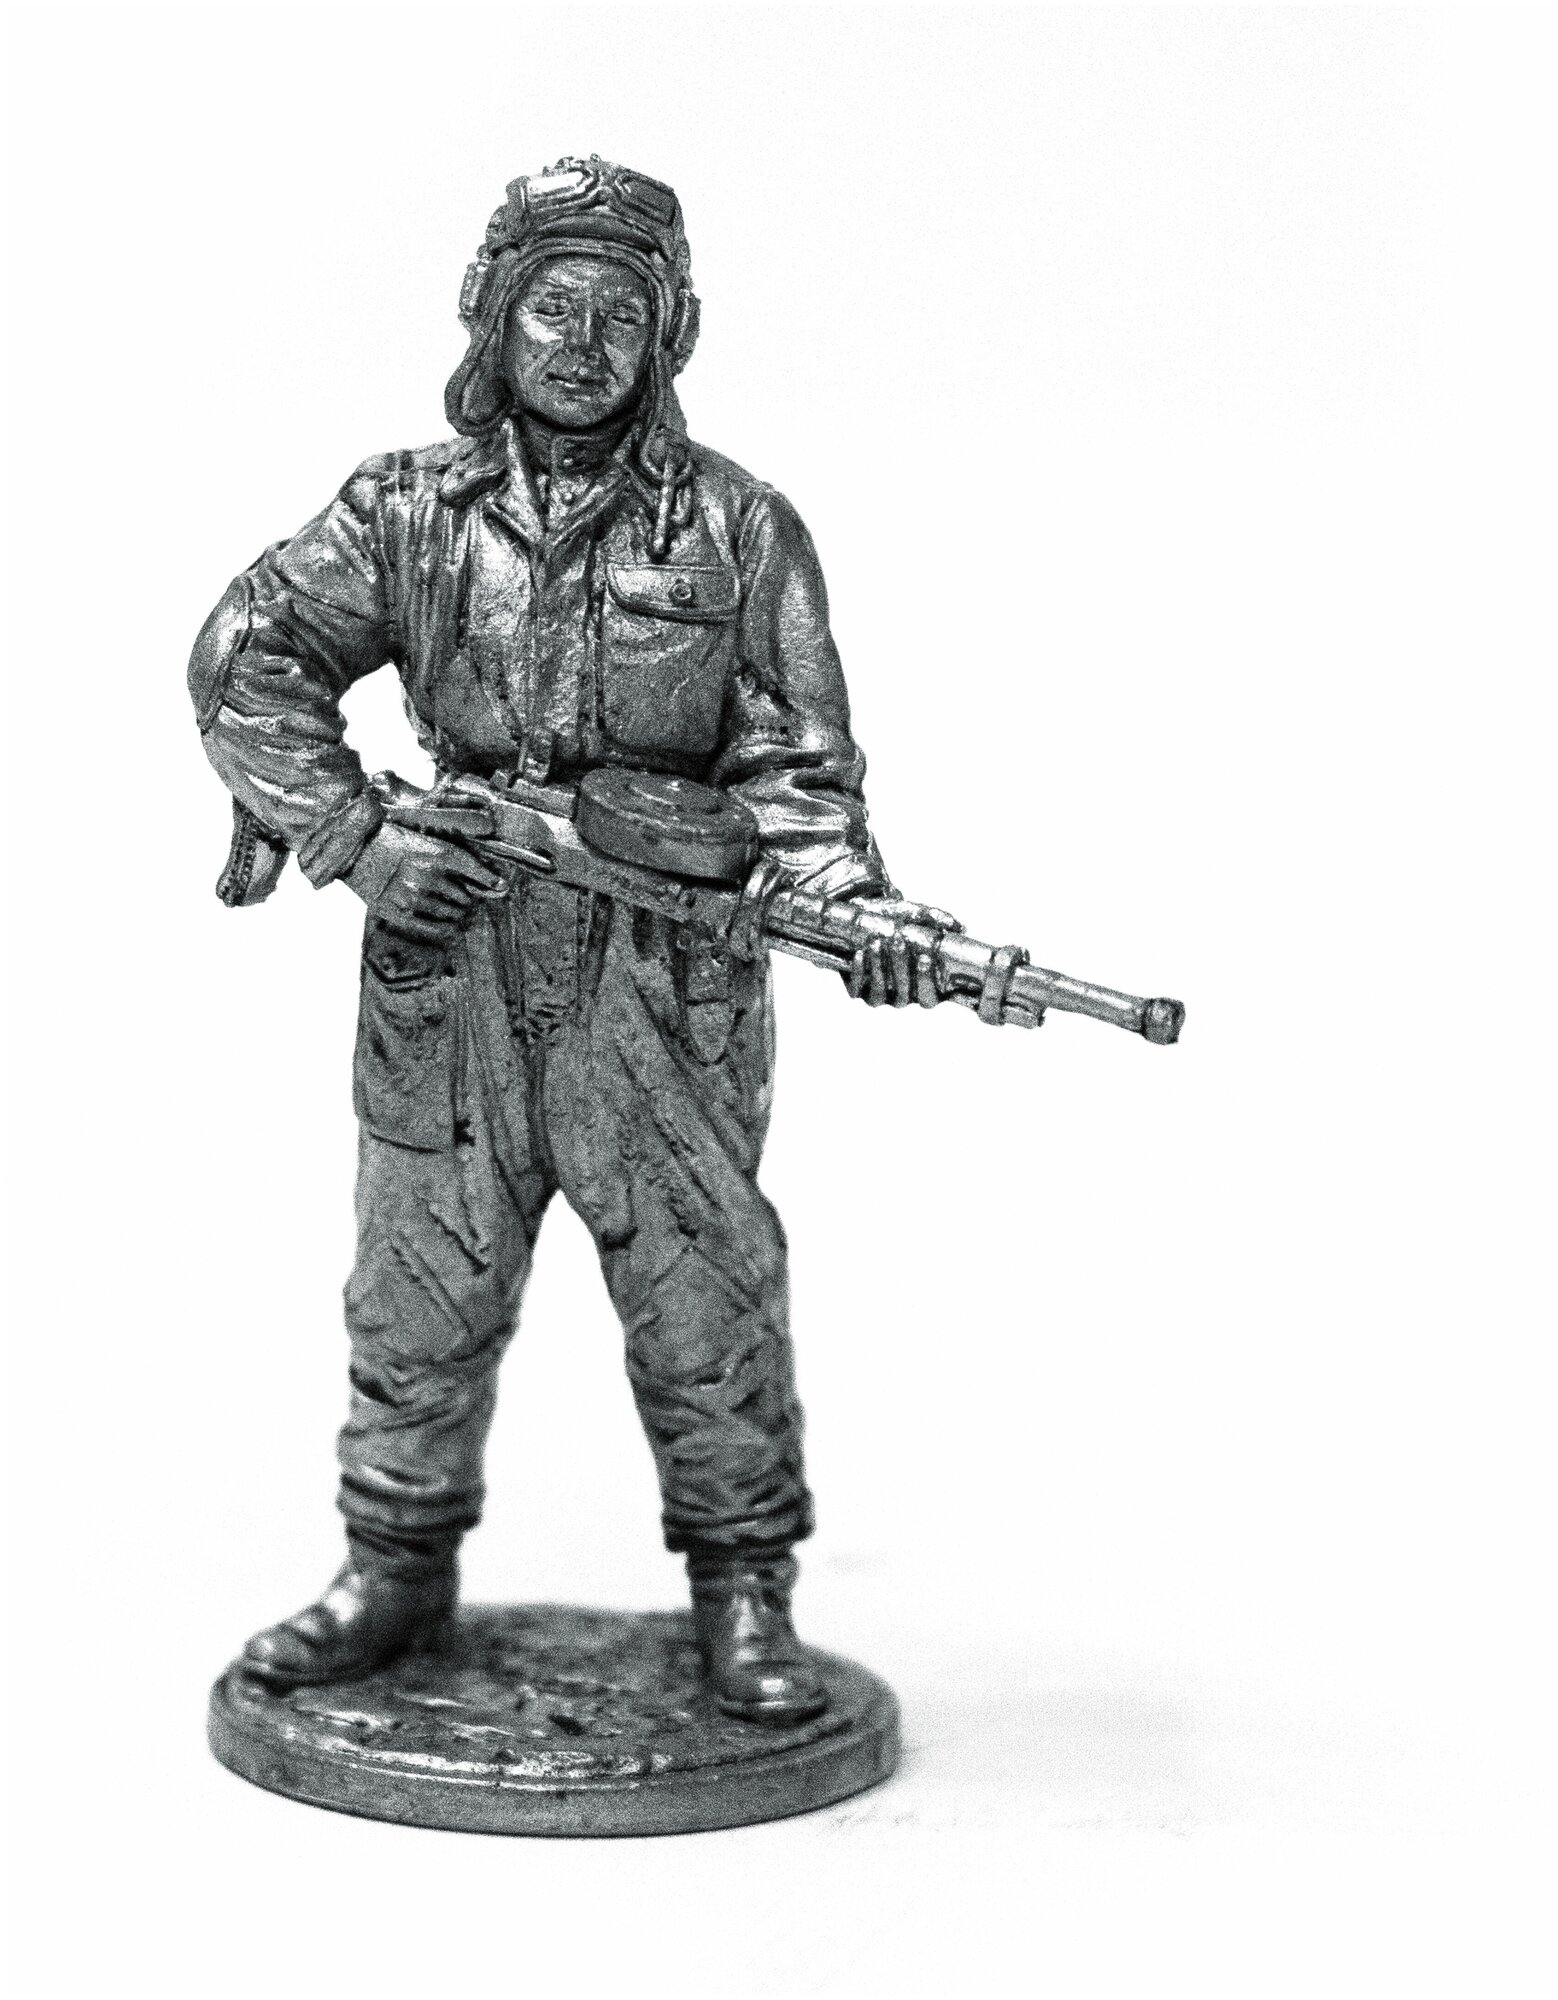 Оловянный солдатик 54мм - фигурка из олова - Танкист стрелок-радист с пулемётом ДТ СССР